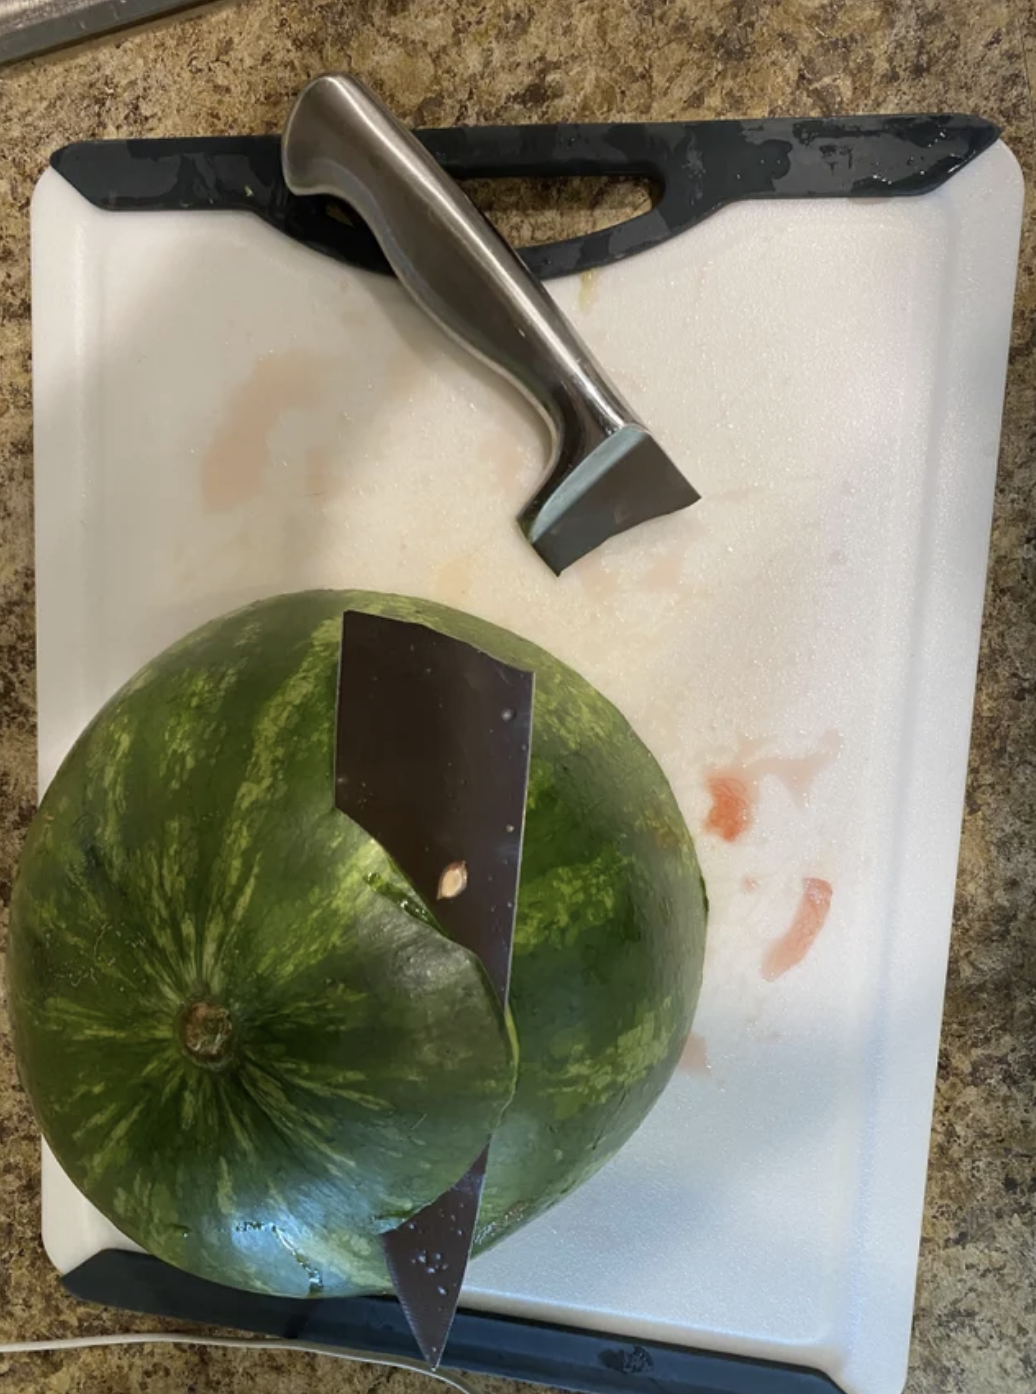 A knife blade stuck in a watermelon